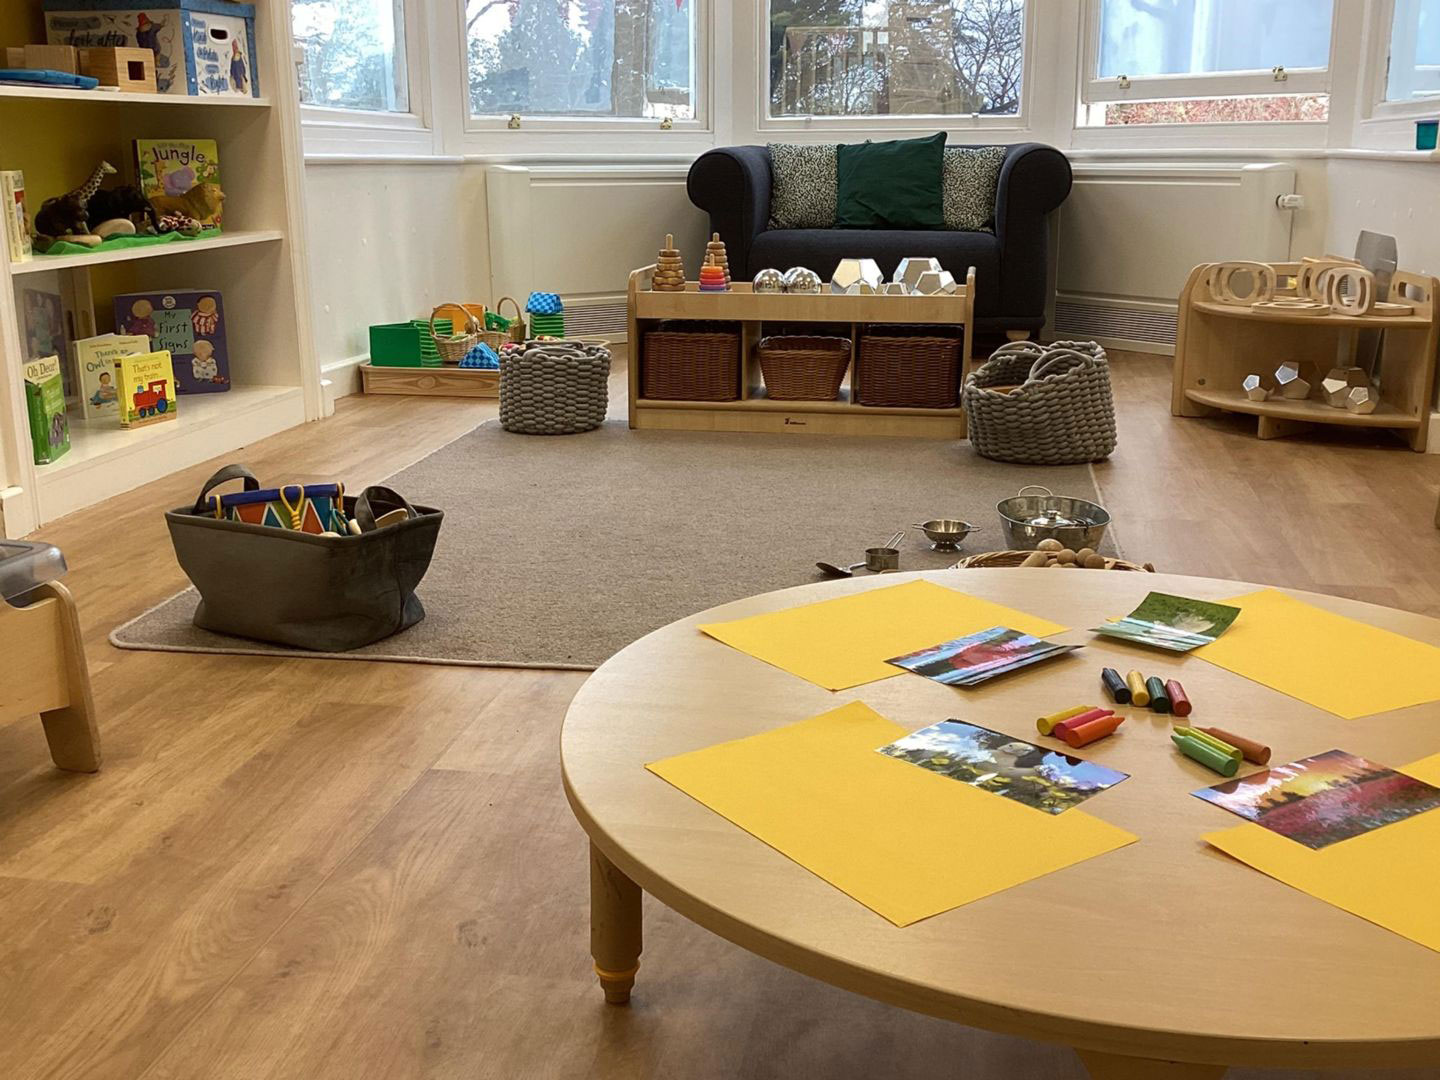 Basingstoke Copper Beeches Day Nursery and Preschool -baby room